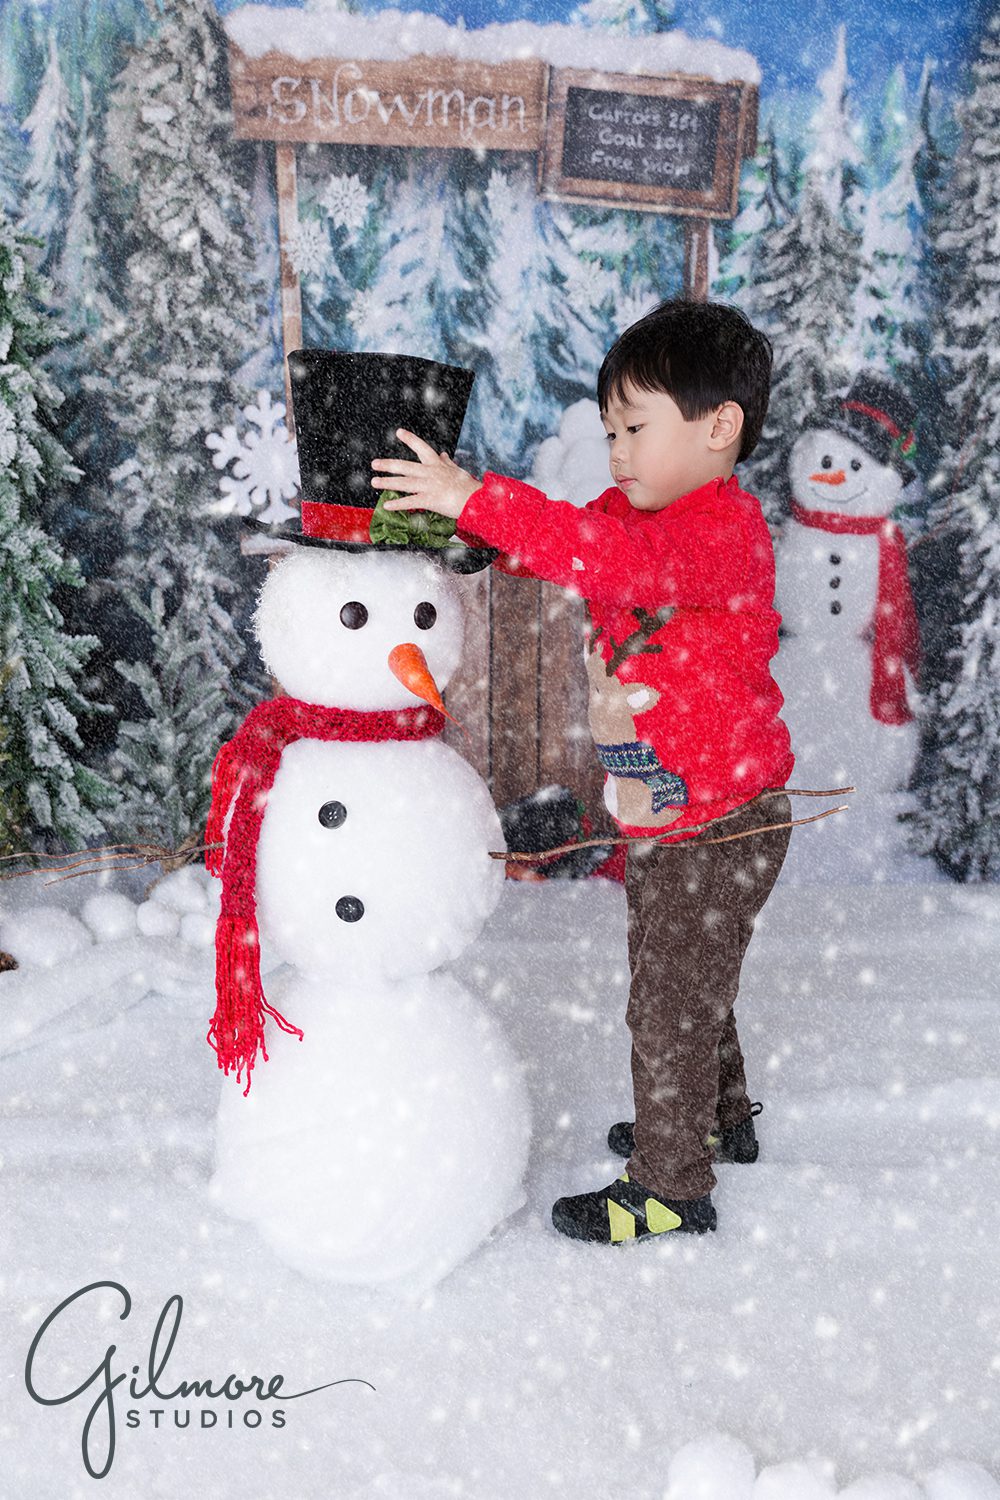 Orange County Mini Session, winter, Christmas, holidays, Xmas, Build a snowman, snow minis, photography session